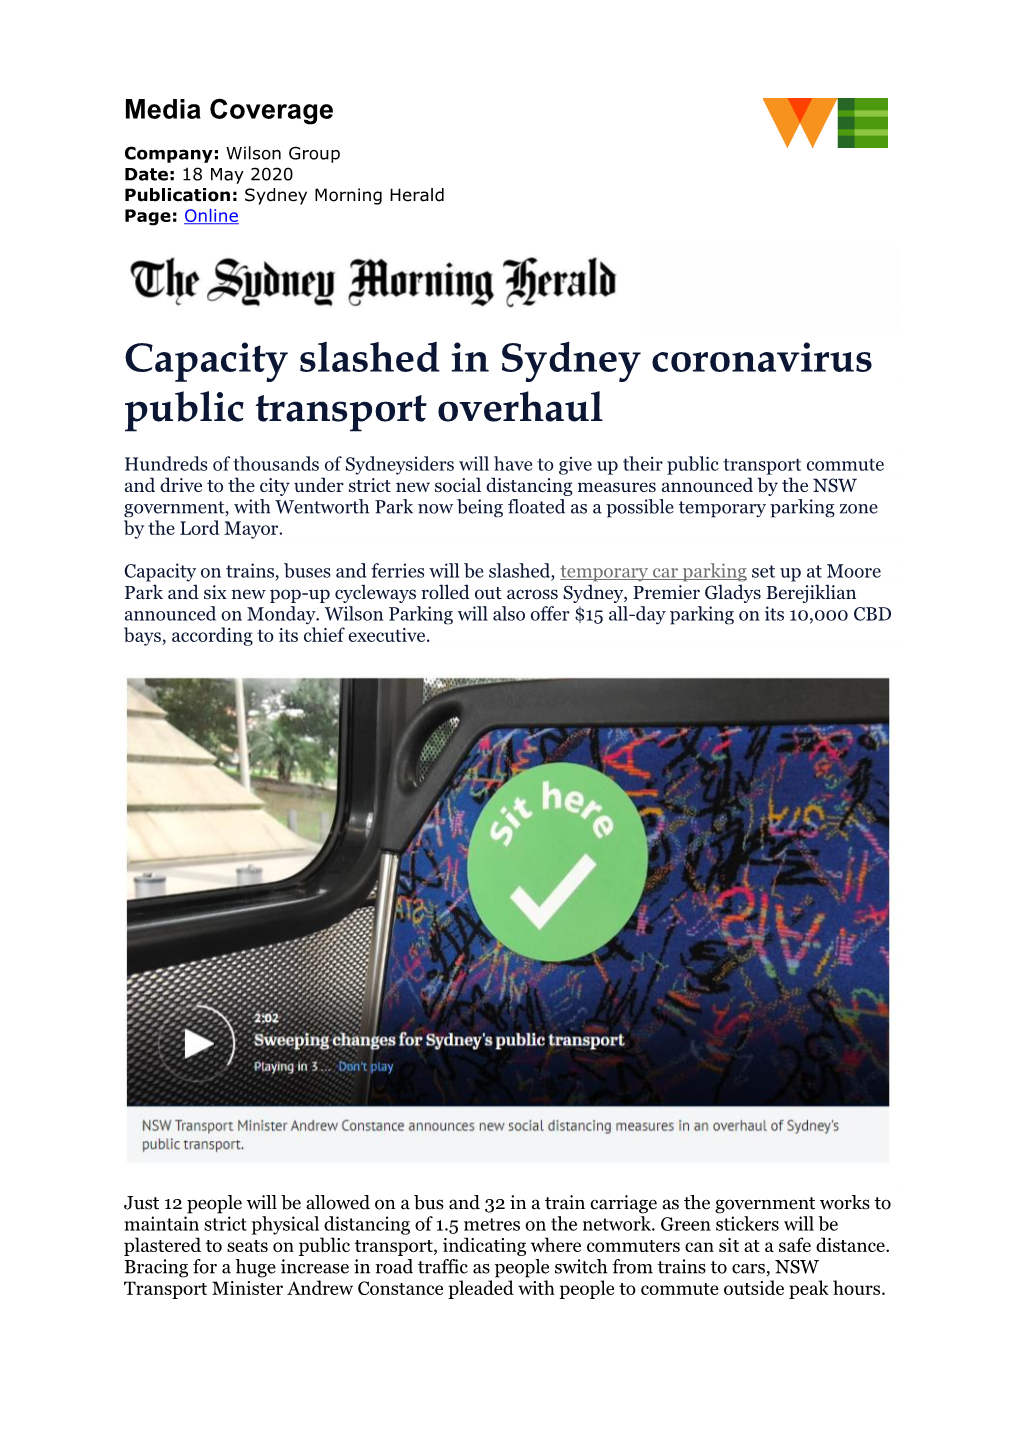 Capacity Slashed in Sydney Coronavirus Public Transport Overhaul